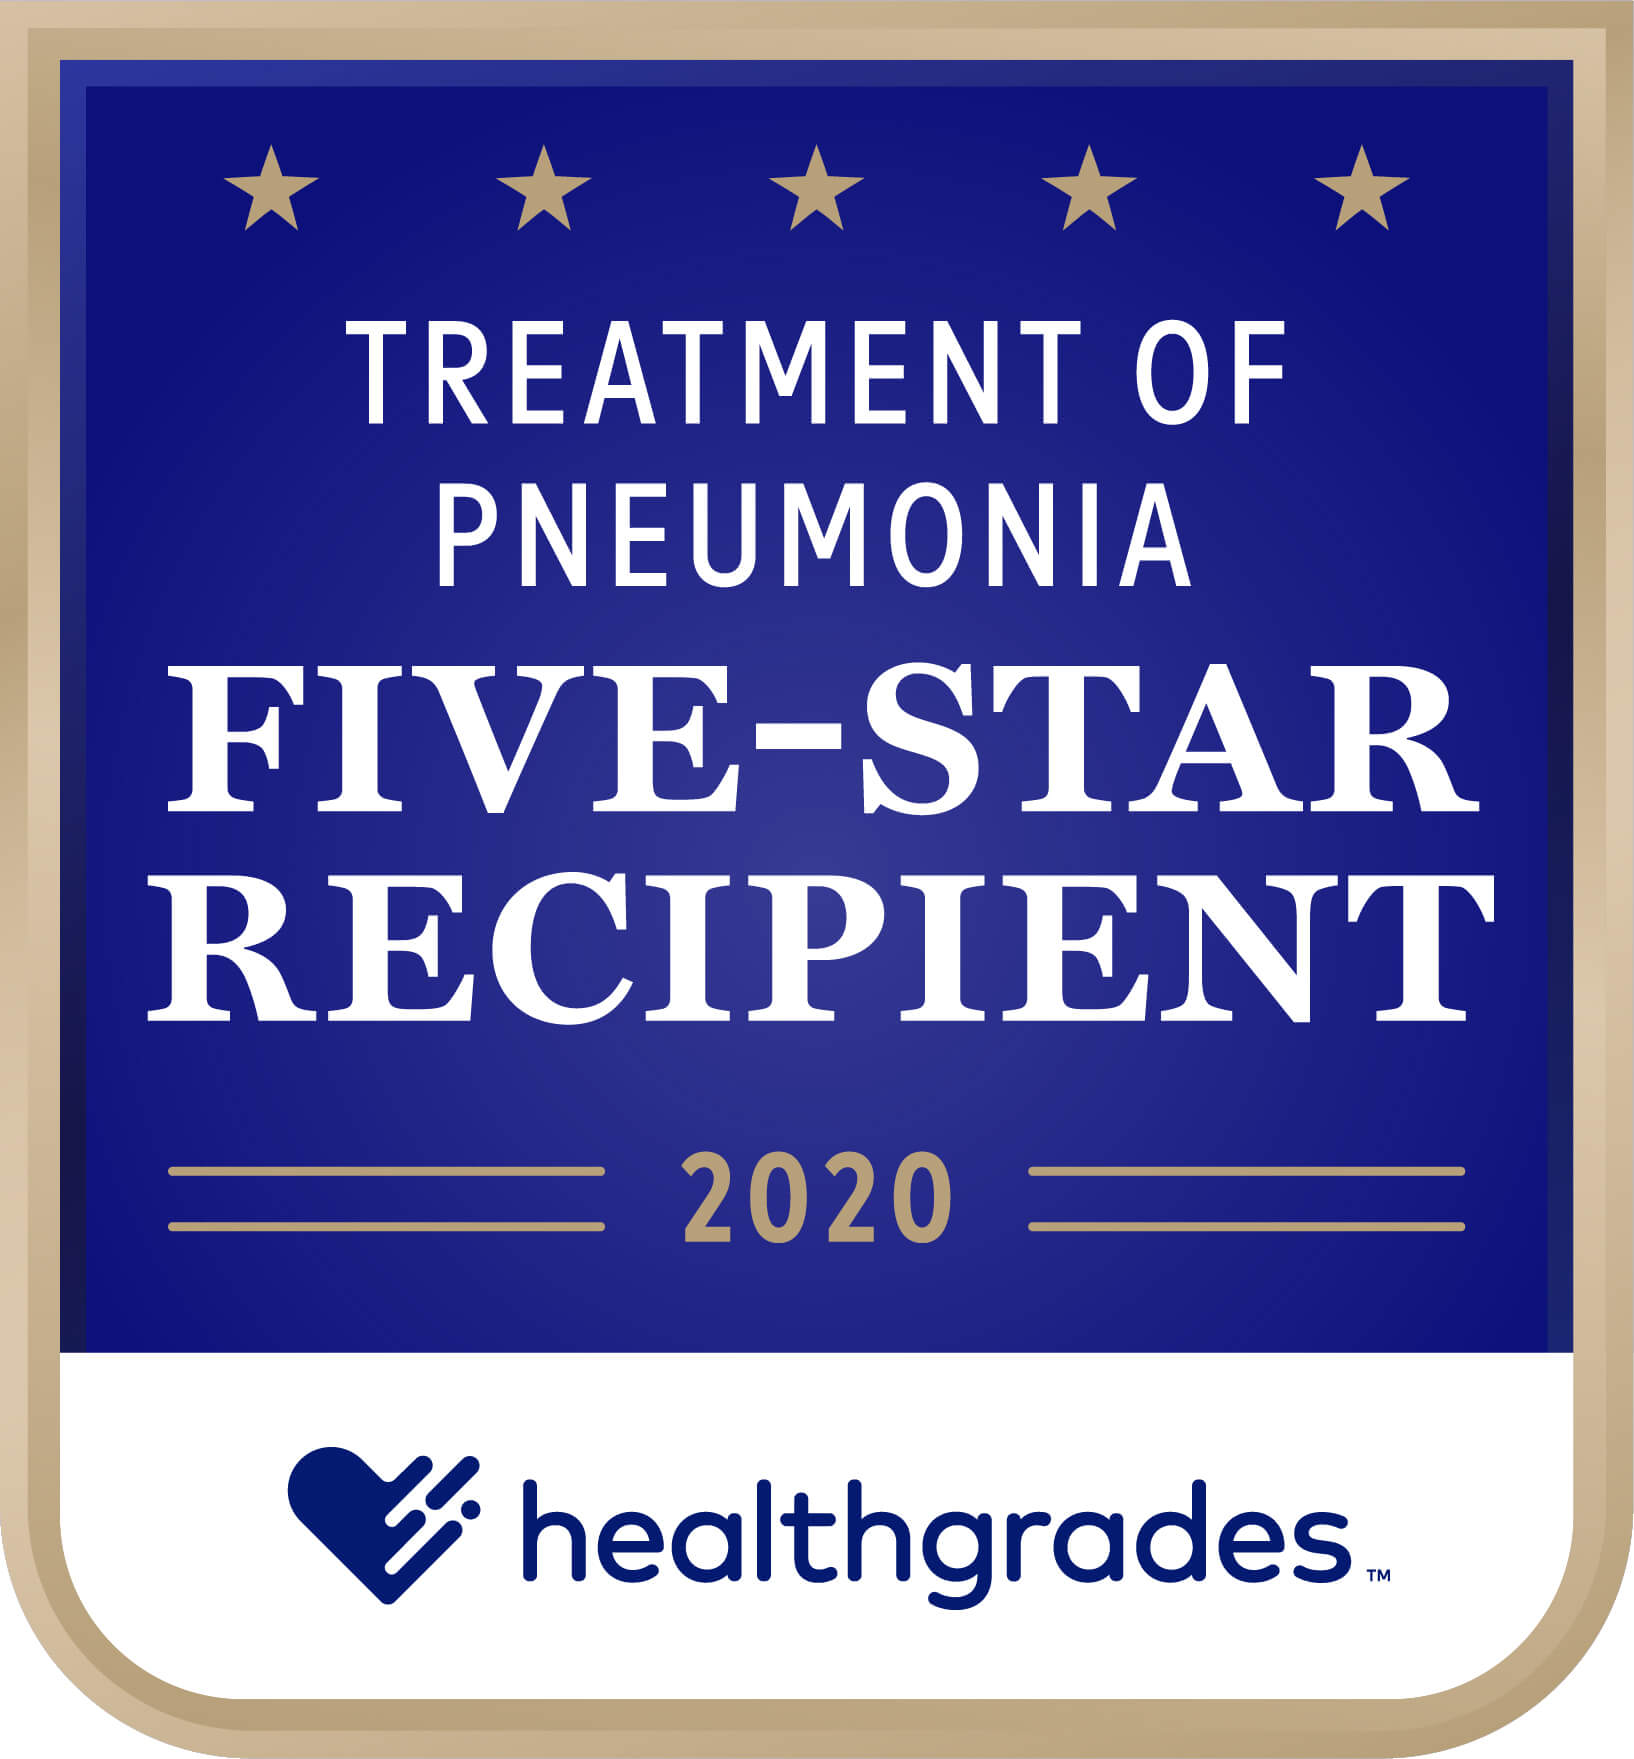 Healthgrades Five-Star Recipient for Treatment of Pneumonia Award 2020